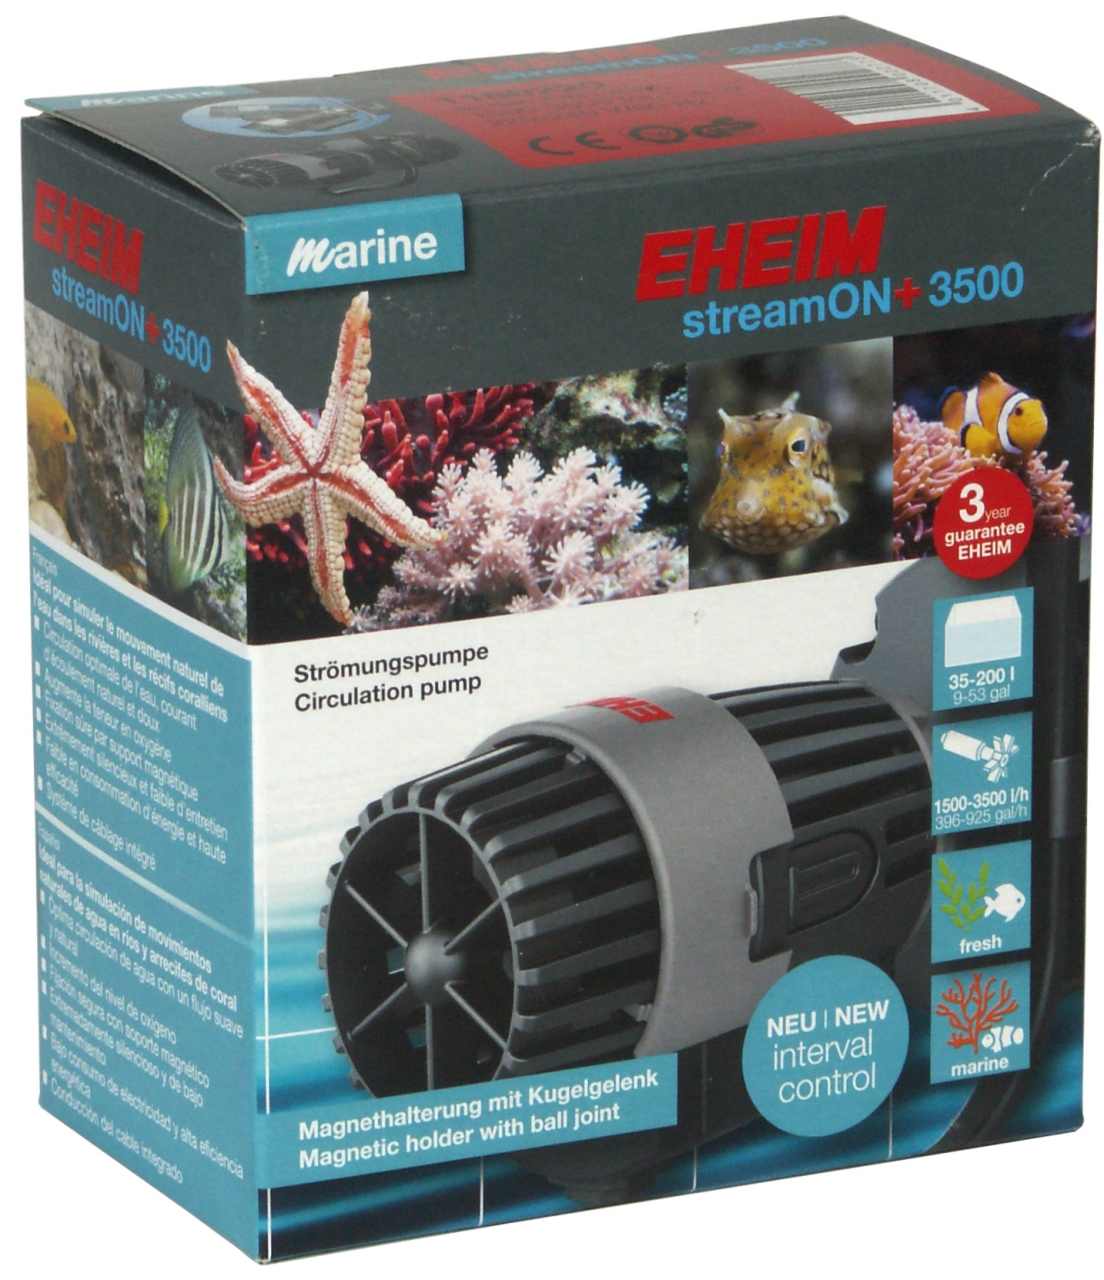 EHEIM StreamON+ Pumpe